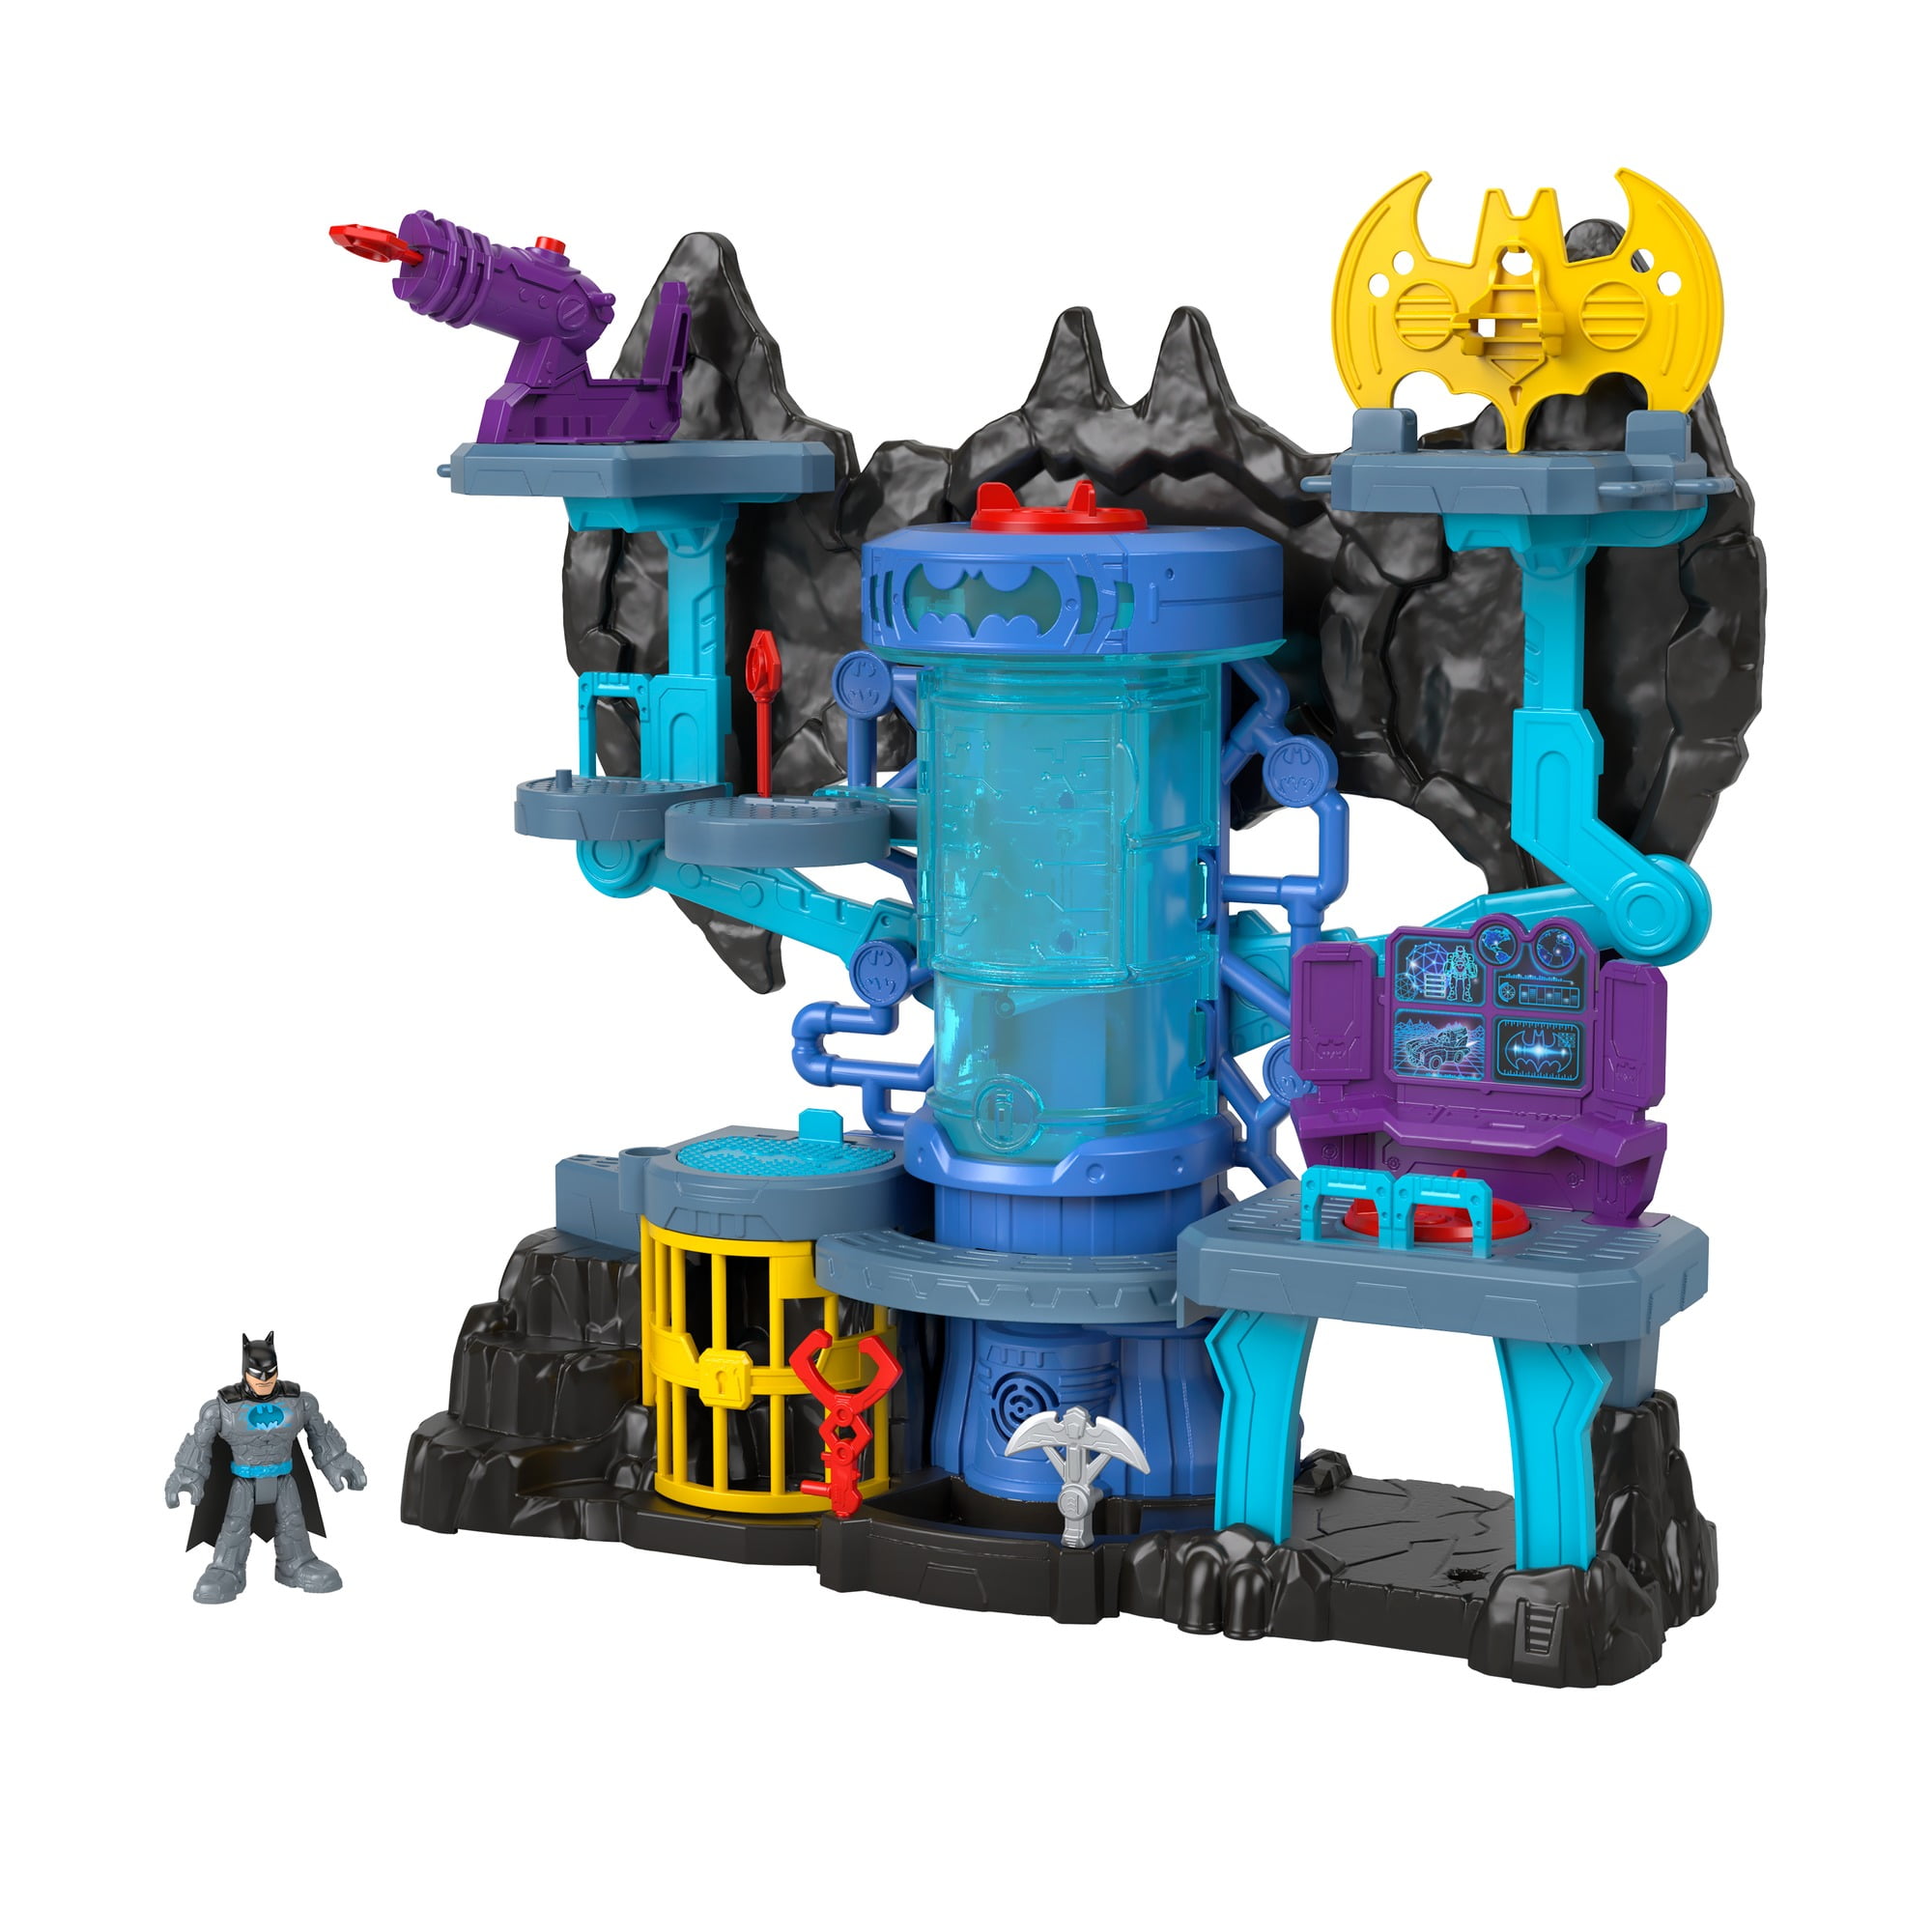 Fisher-Price Imaginext DC Super Friends Super Surround Batcave Multicolored for sale online 